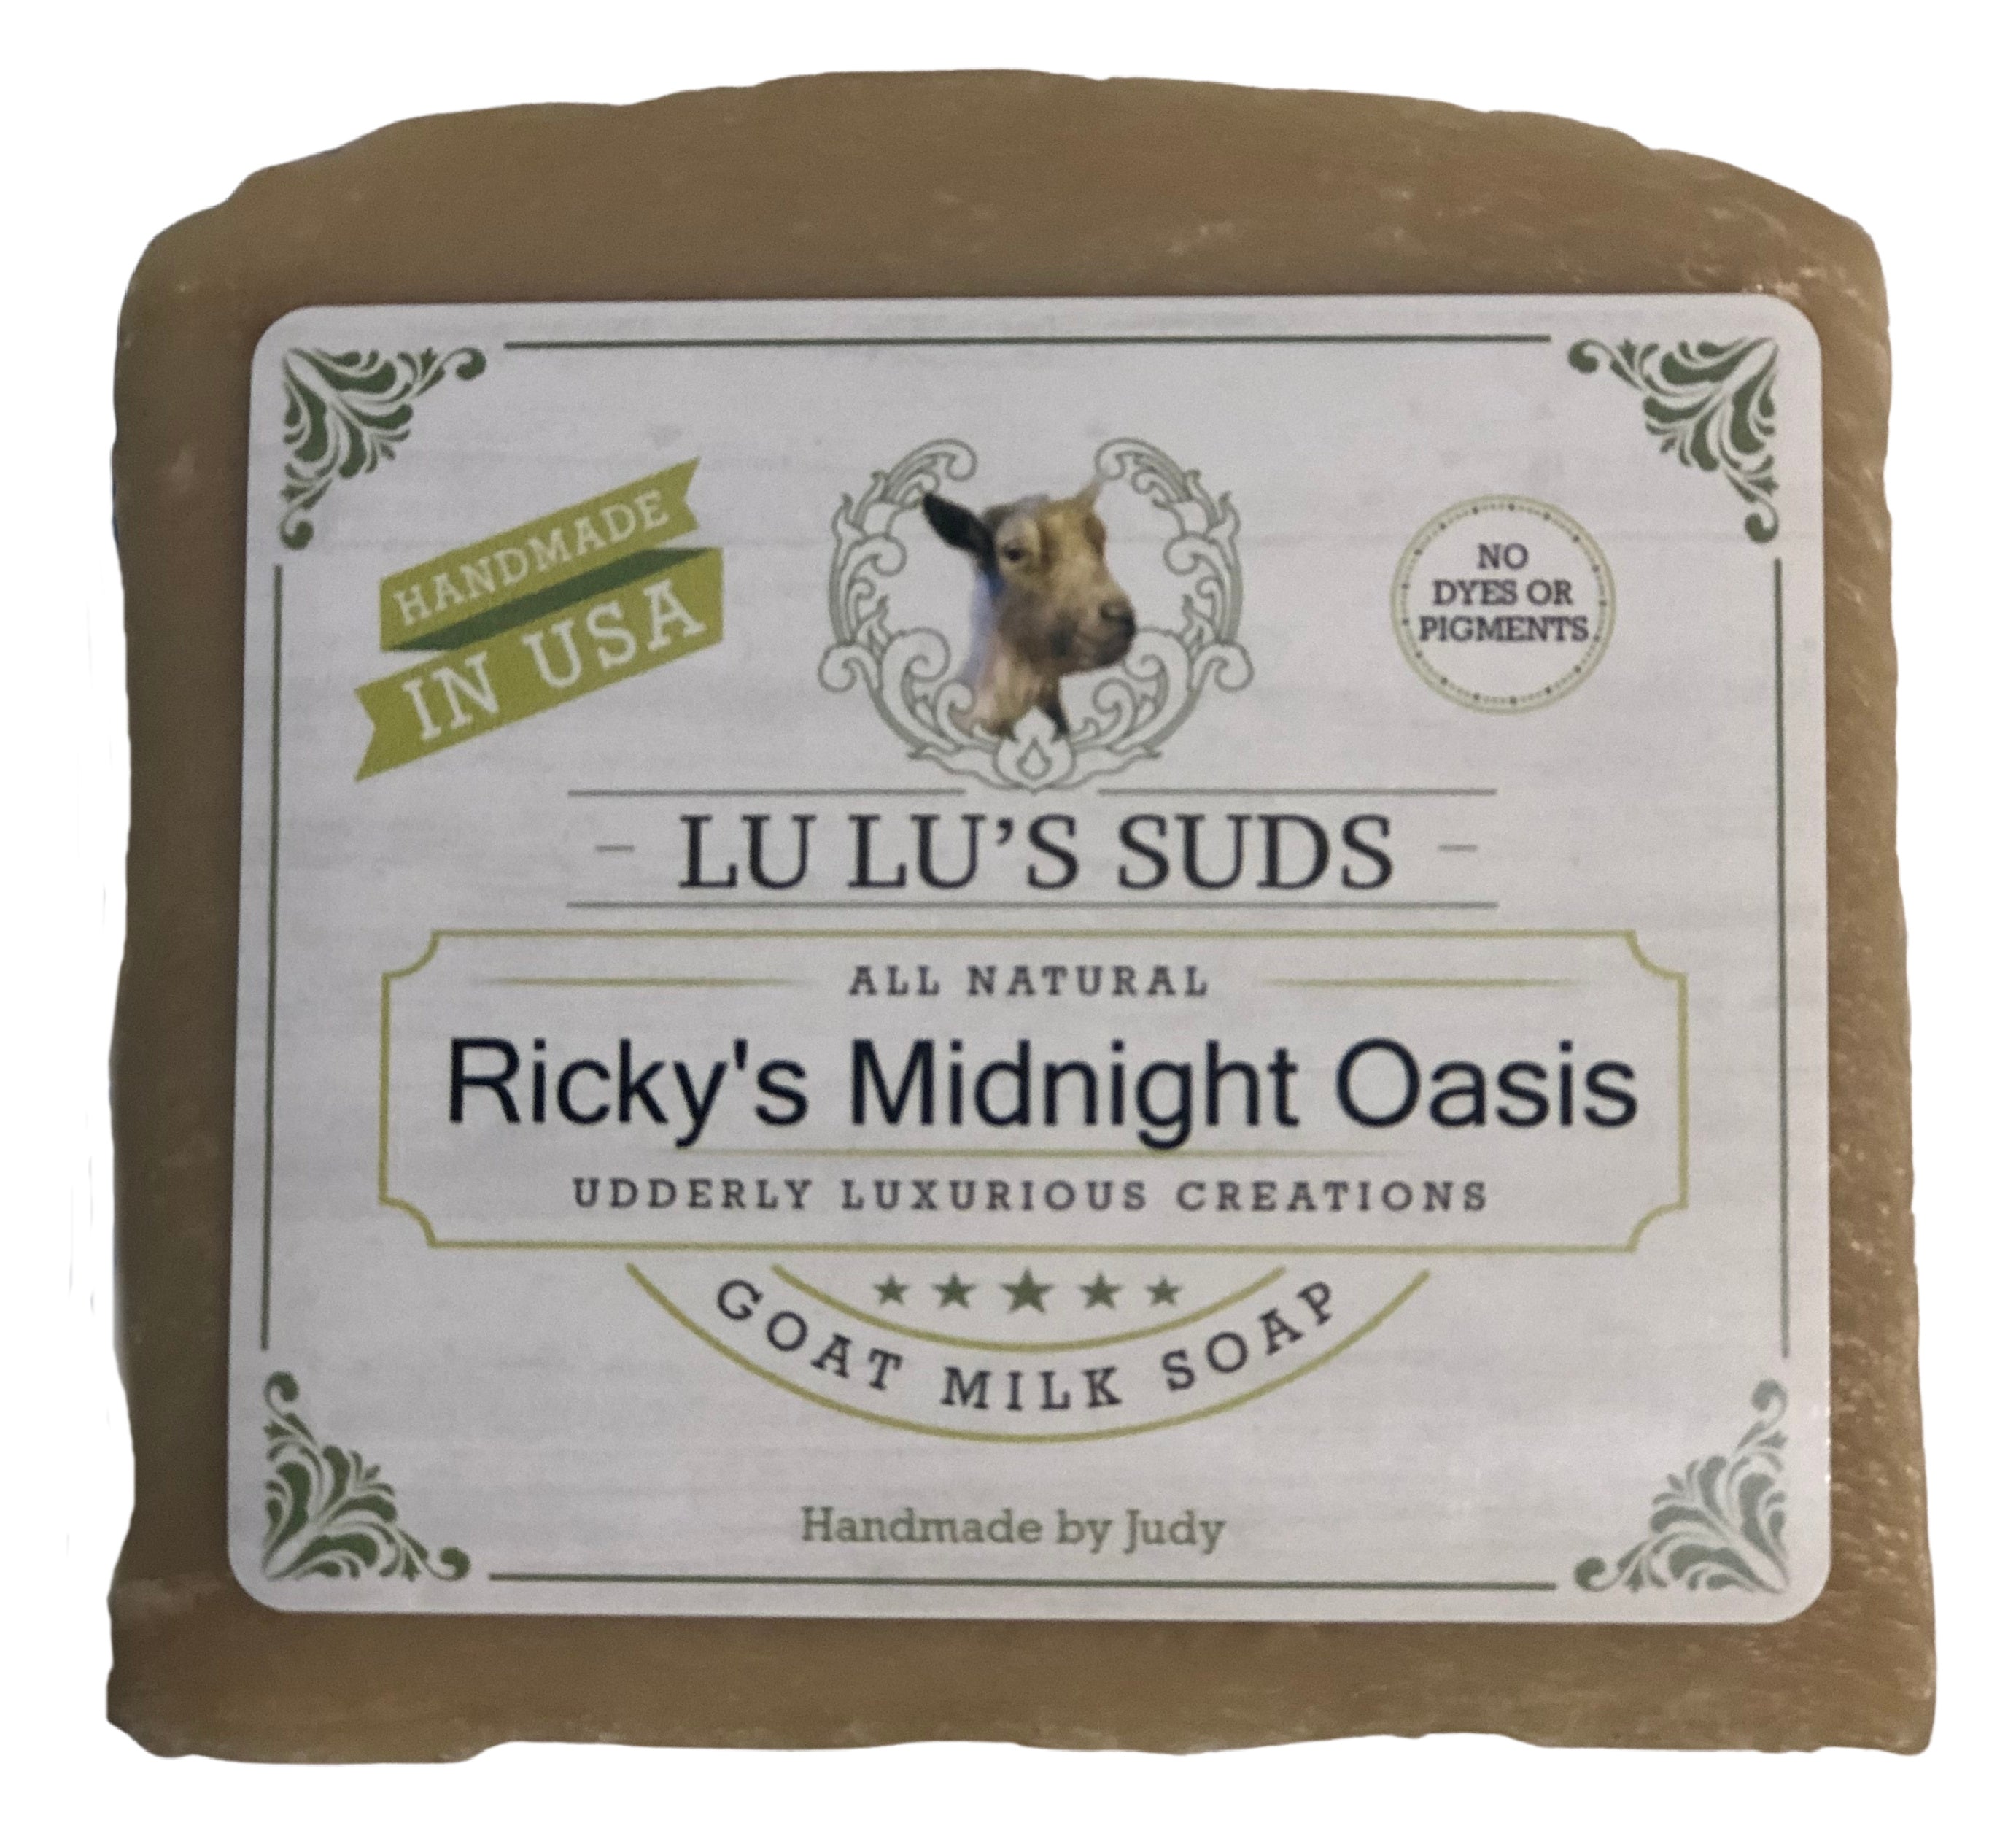 Ricky's Midnight Oasis Goat Milk Soap 5 oz.